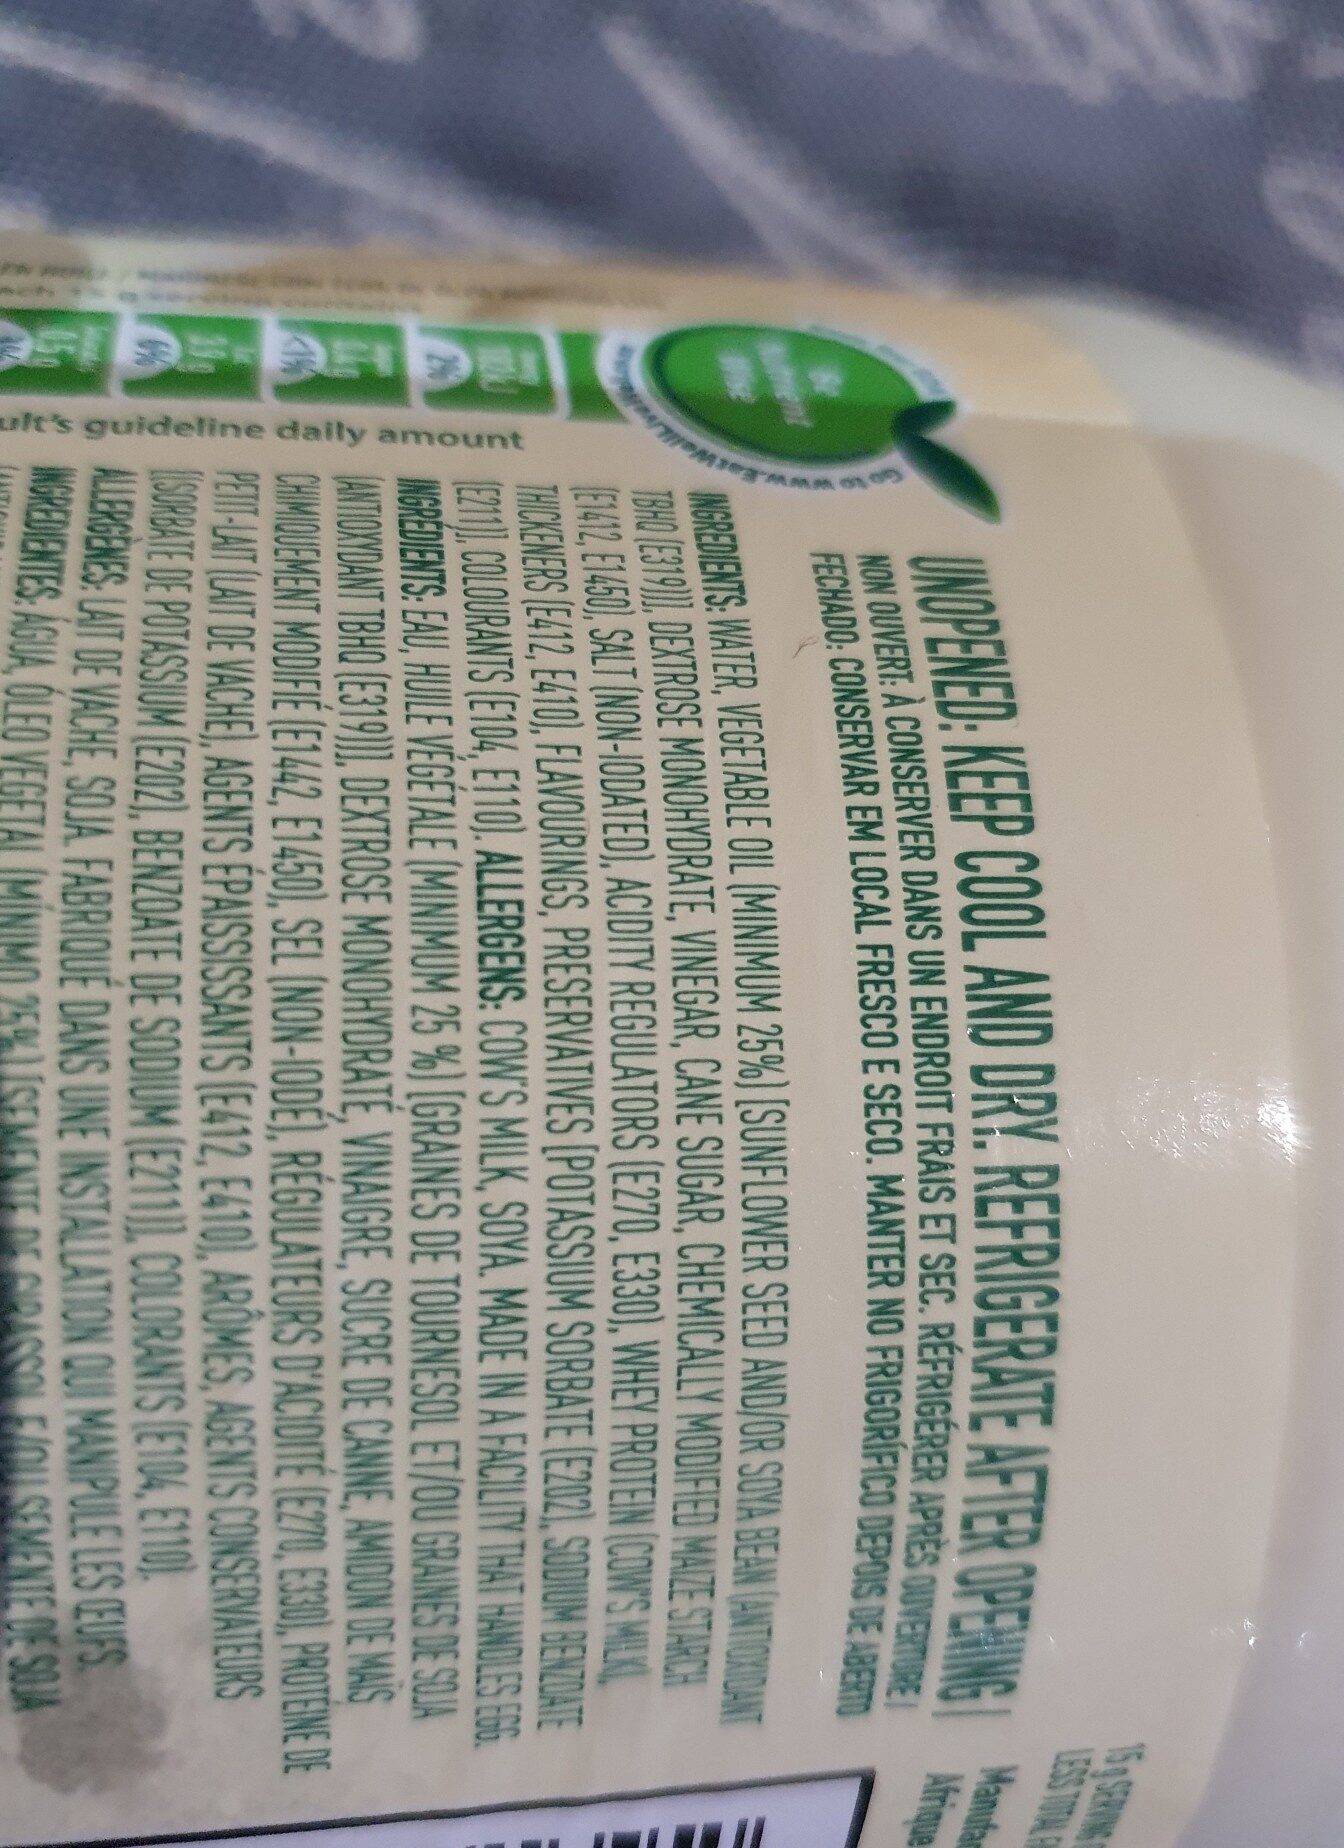 crosse and blackwell reduced oil mayonnaise - Ingredients - en